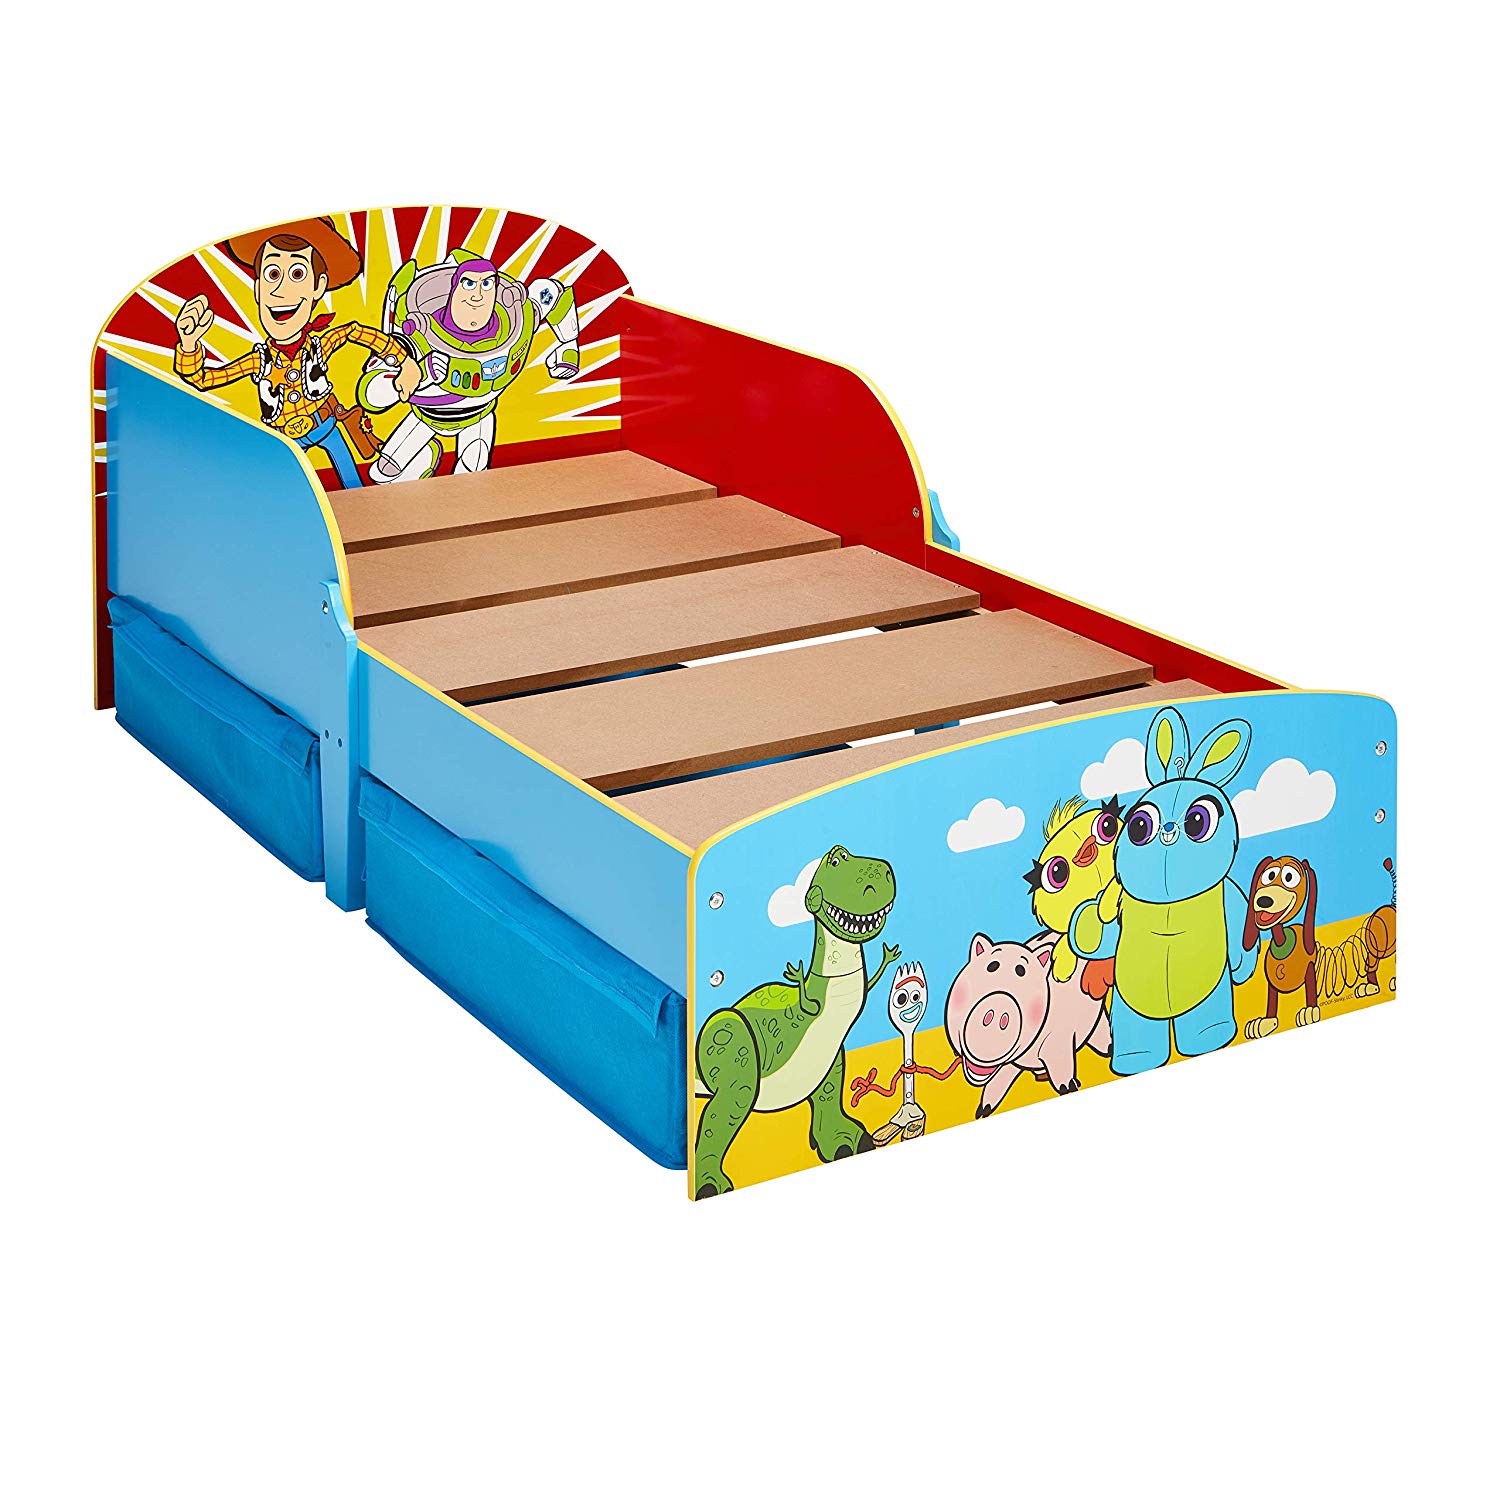 Cama Infantil Toy Story 516tyy Indalchess Tienda De Coches Para Ninos